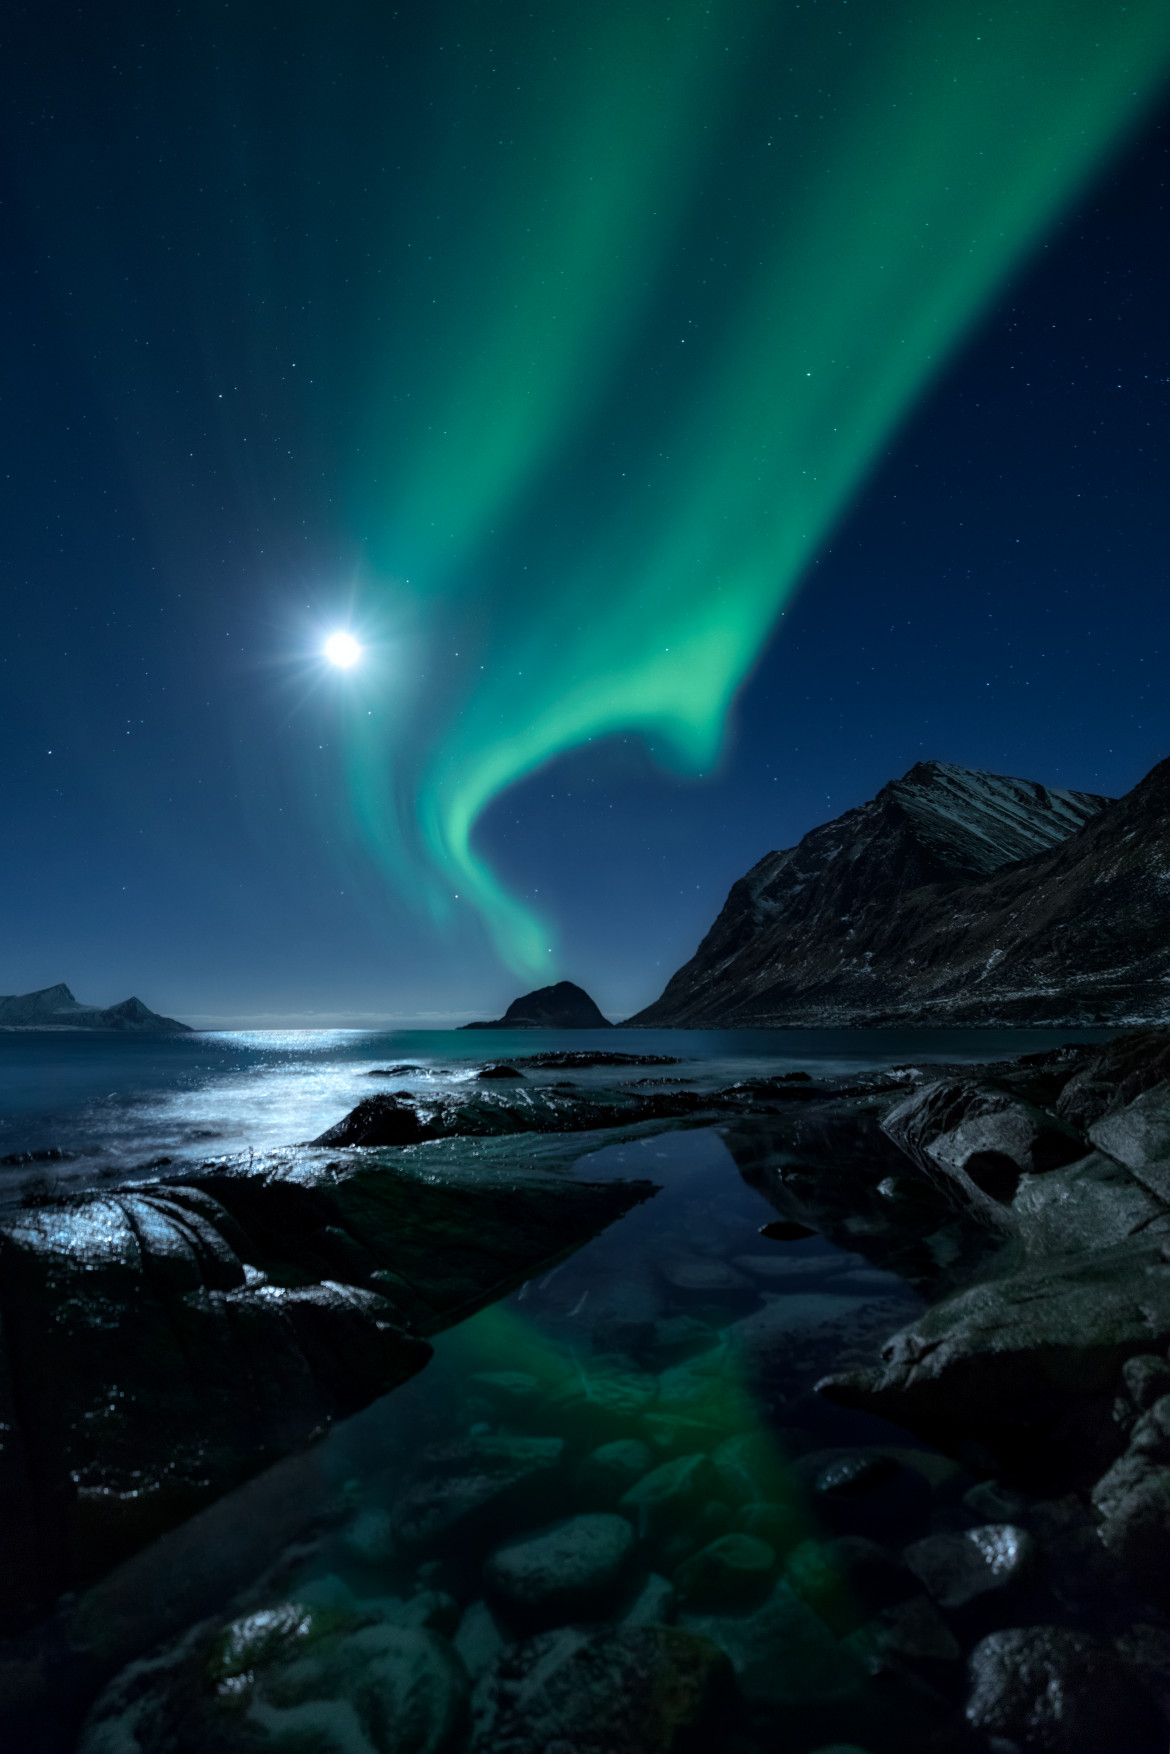 fot. Mikkel Beiter, "Aurorascape", 3. miejsce w kategorii Aurorae / Insight Astronomy Photographer of the Year 2018